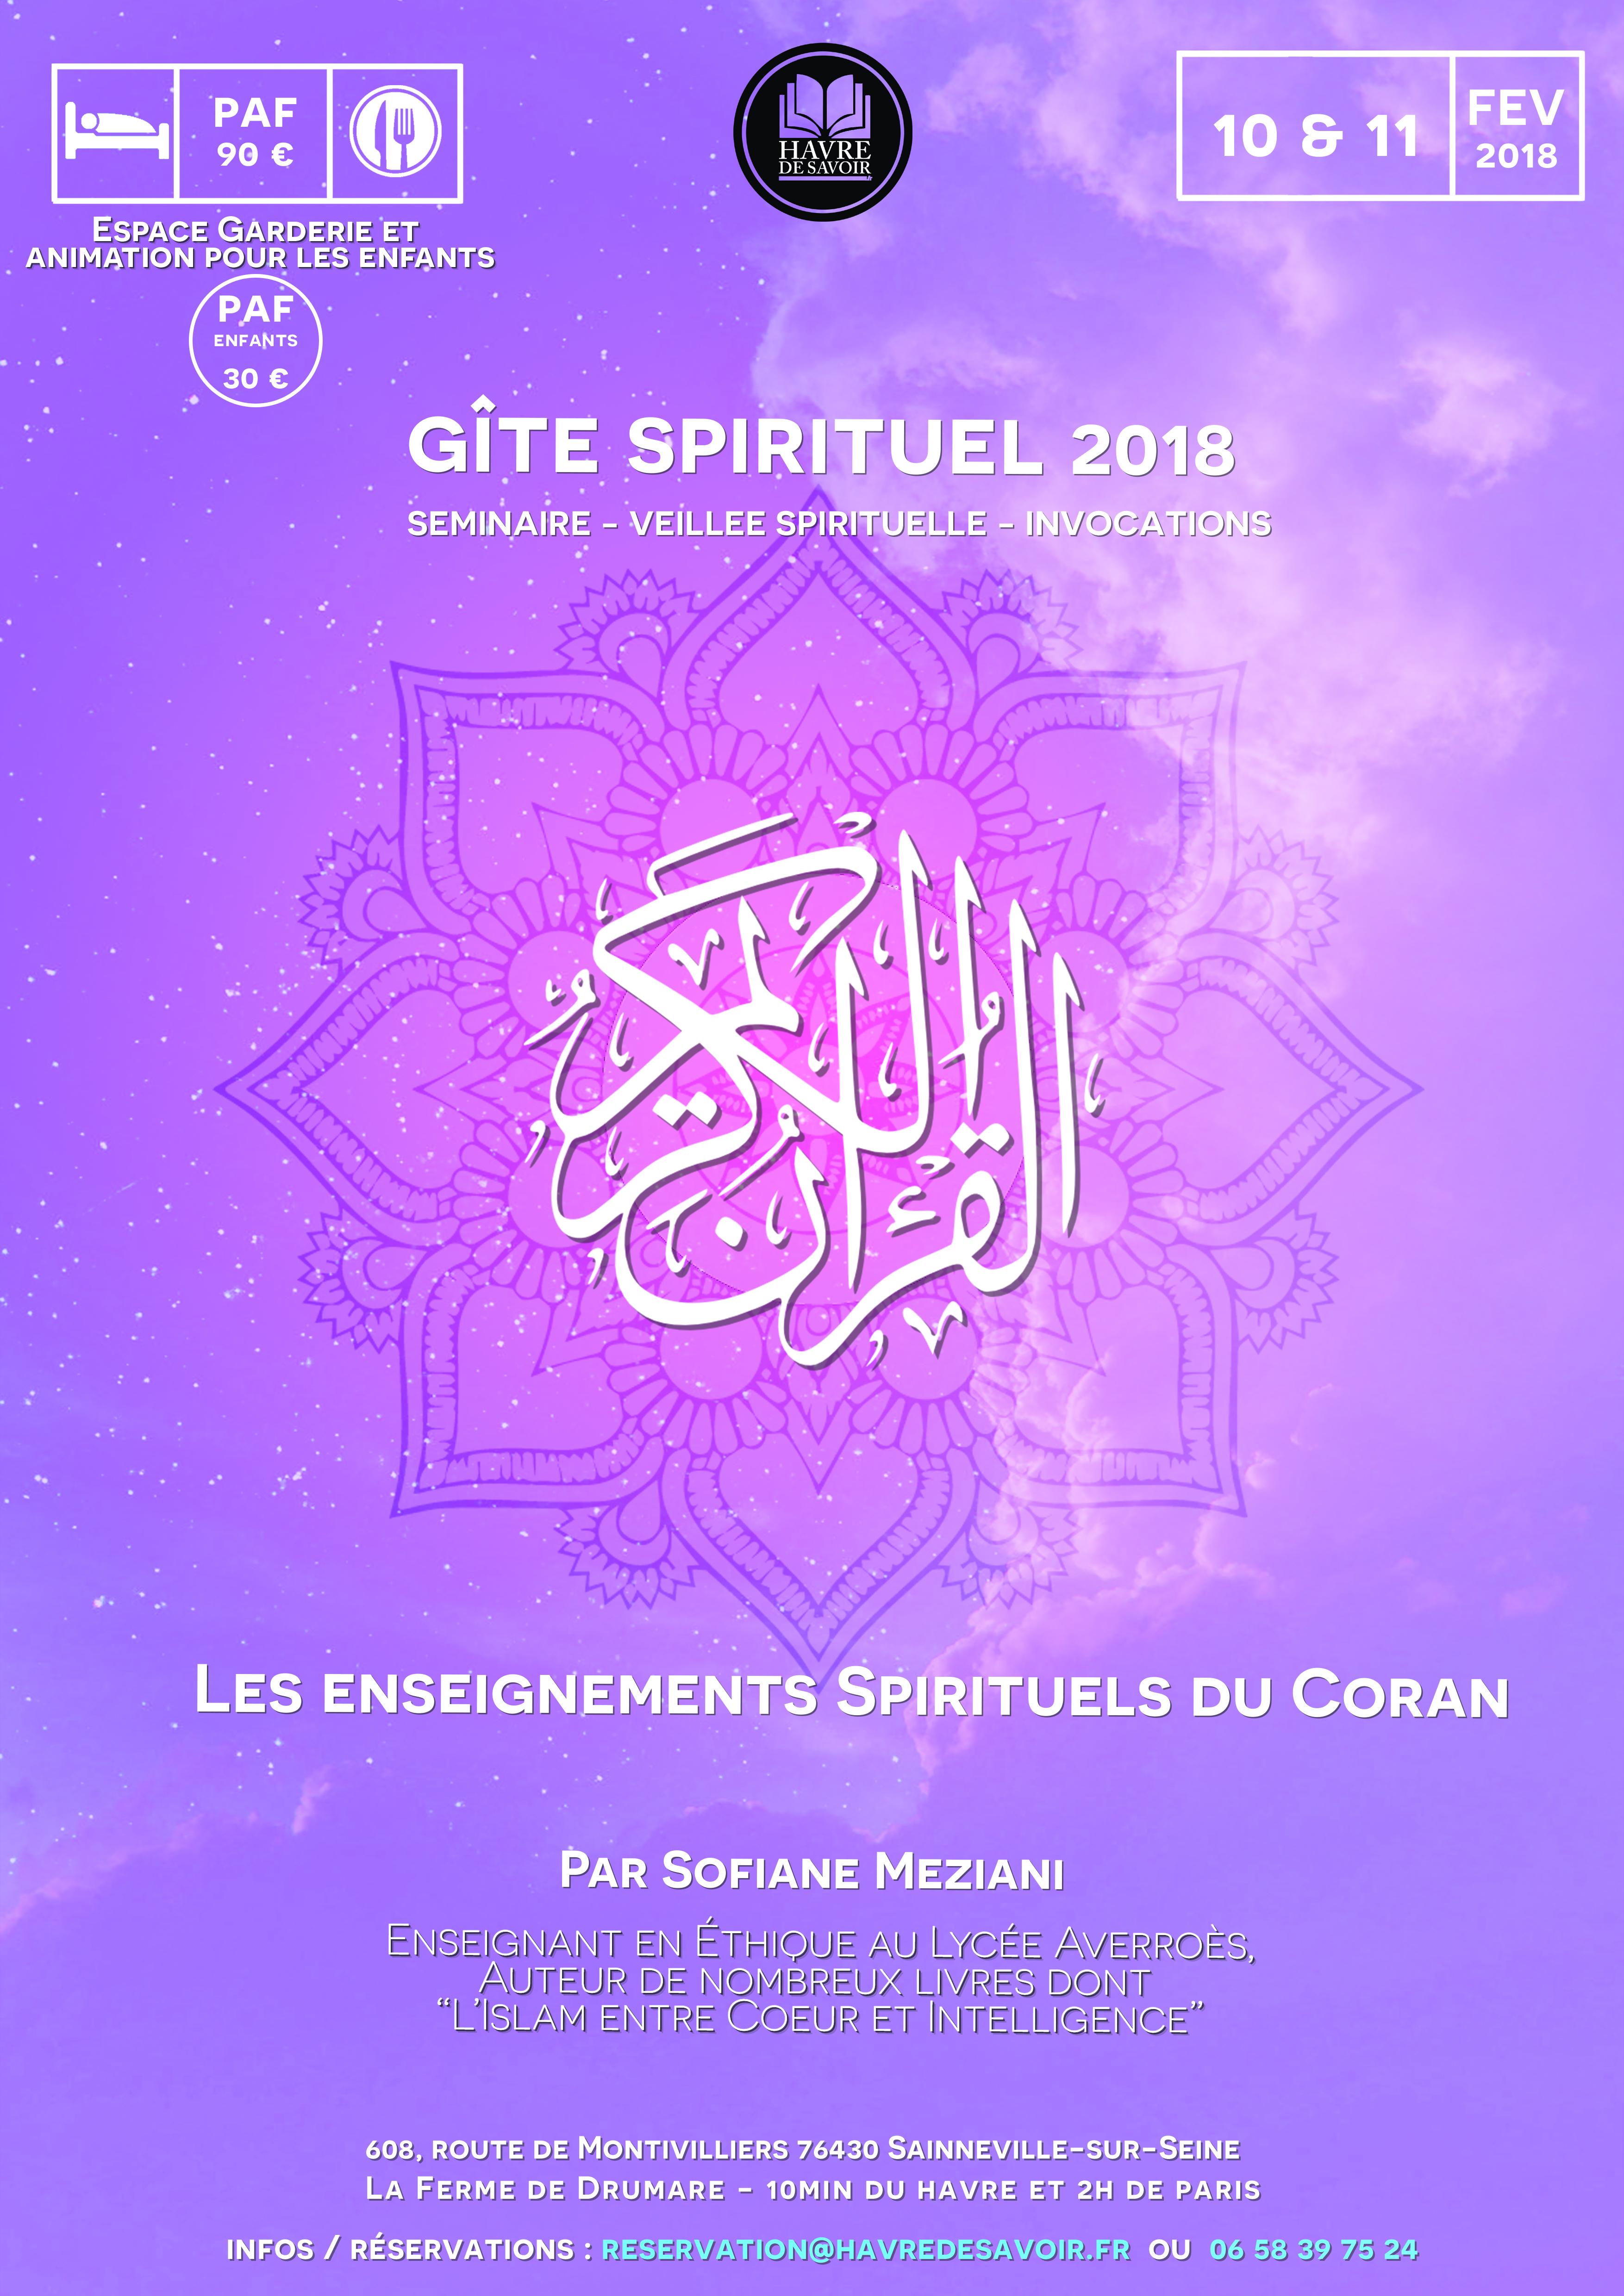 Gîte spirituel "Les enseignements spirituels du Coran " - 10 & 11 Février 2018